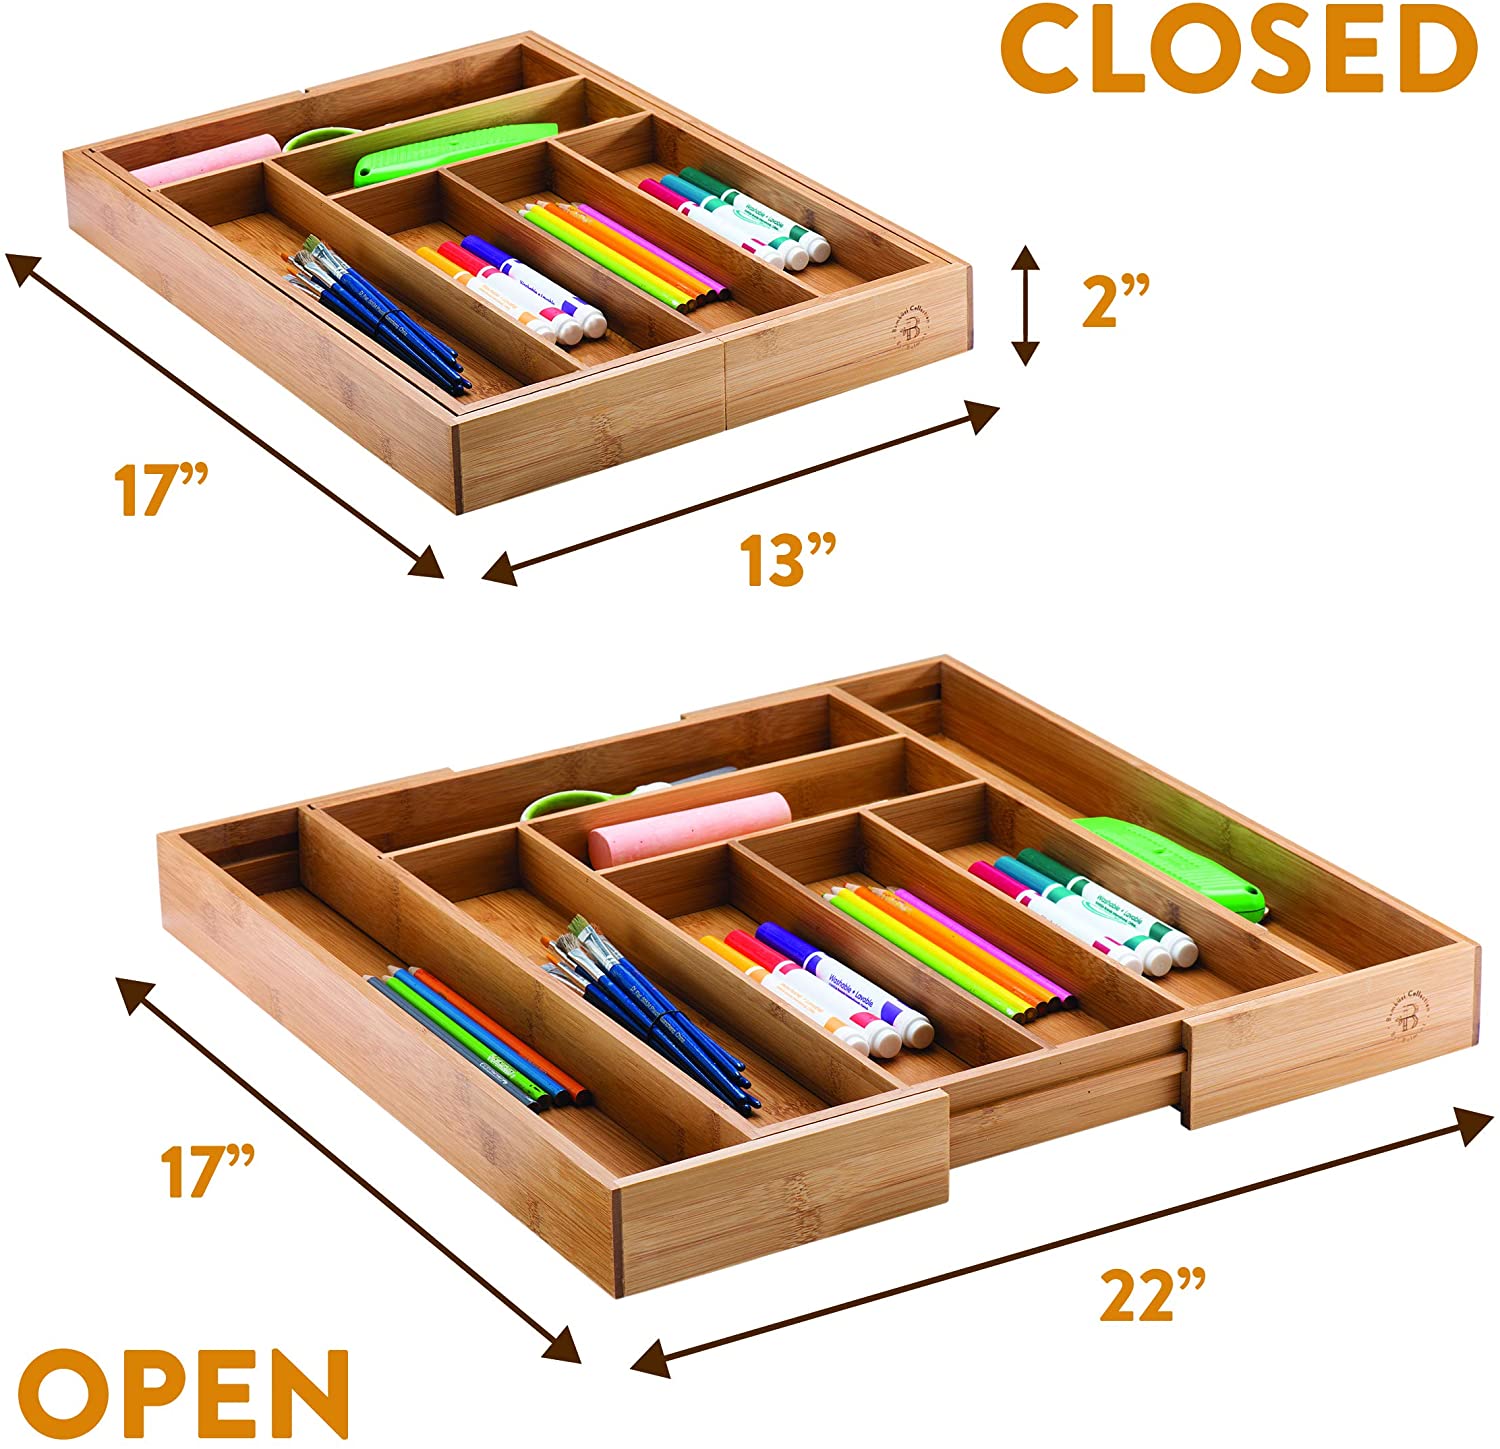 Small Adjustable Bamboo Drawer Organizer (4-Pack) – Bambusi